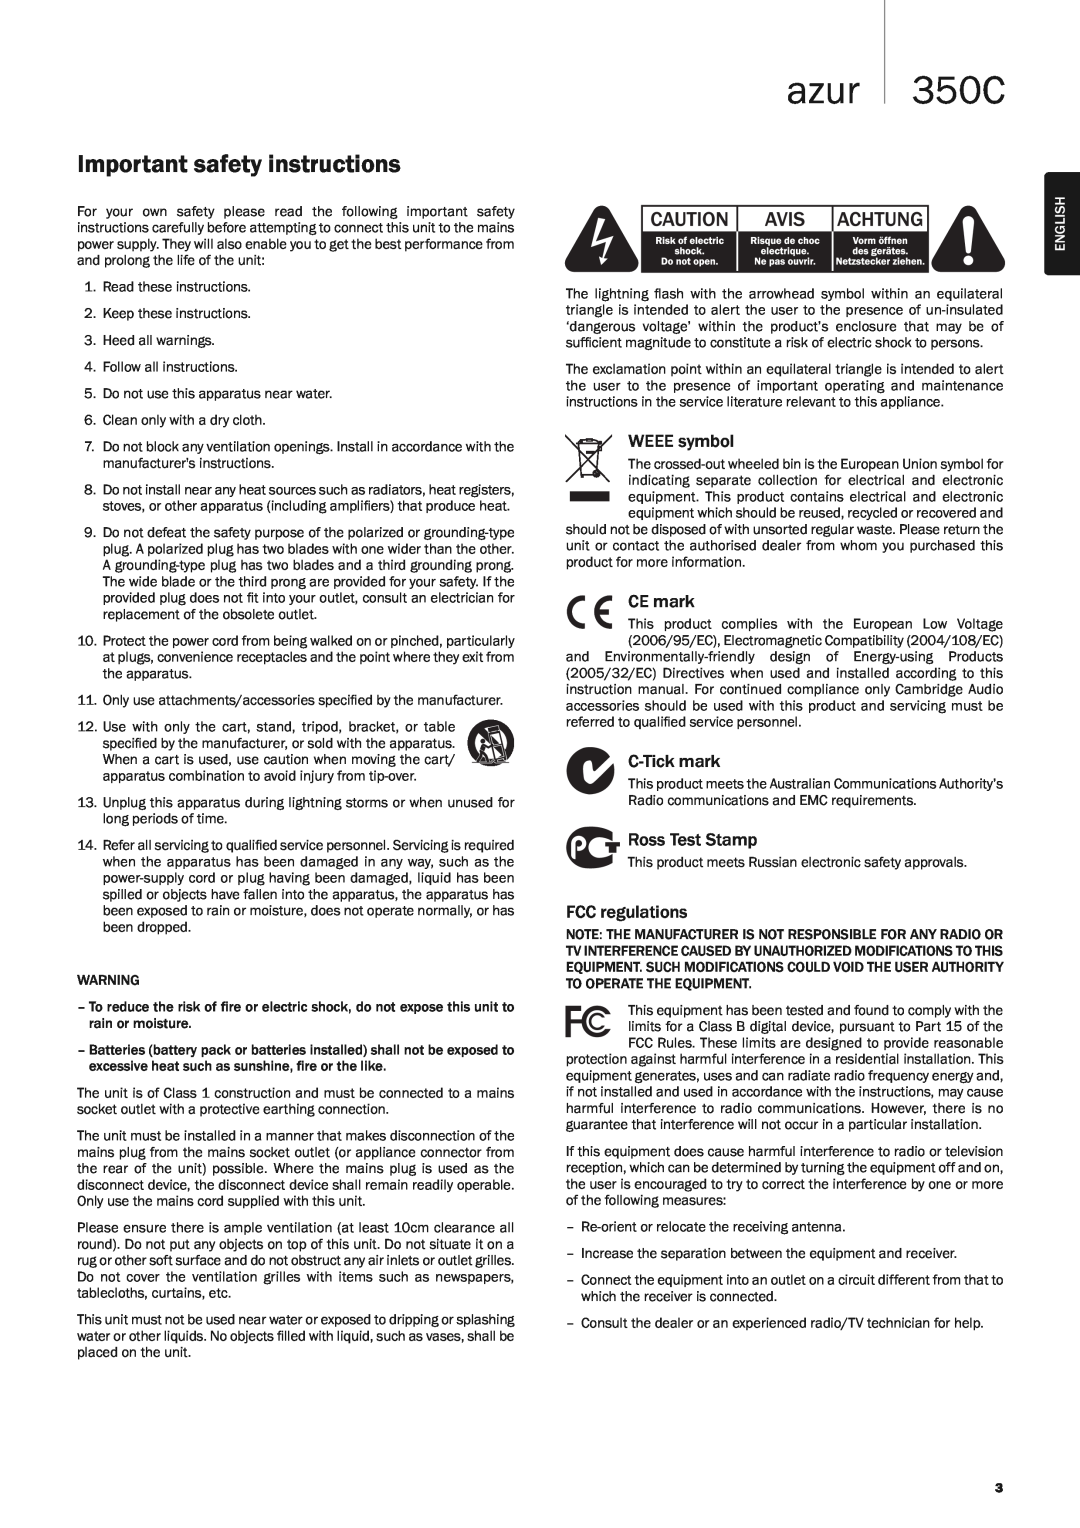 Cambridge Audio azur 350C, Important safety instructions, WEEE symbol, CE mark, C-Tickmark, Ross Test Stamp, English 